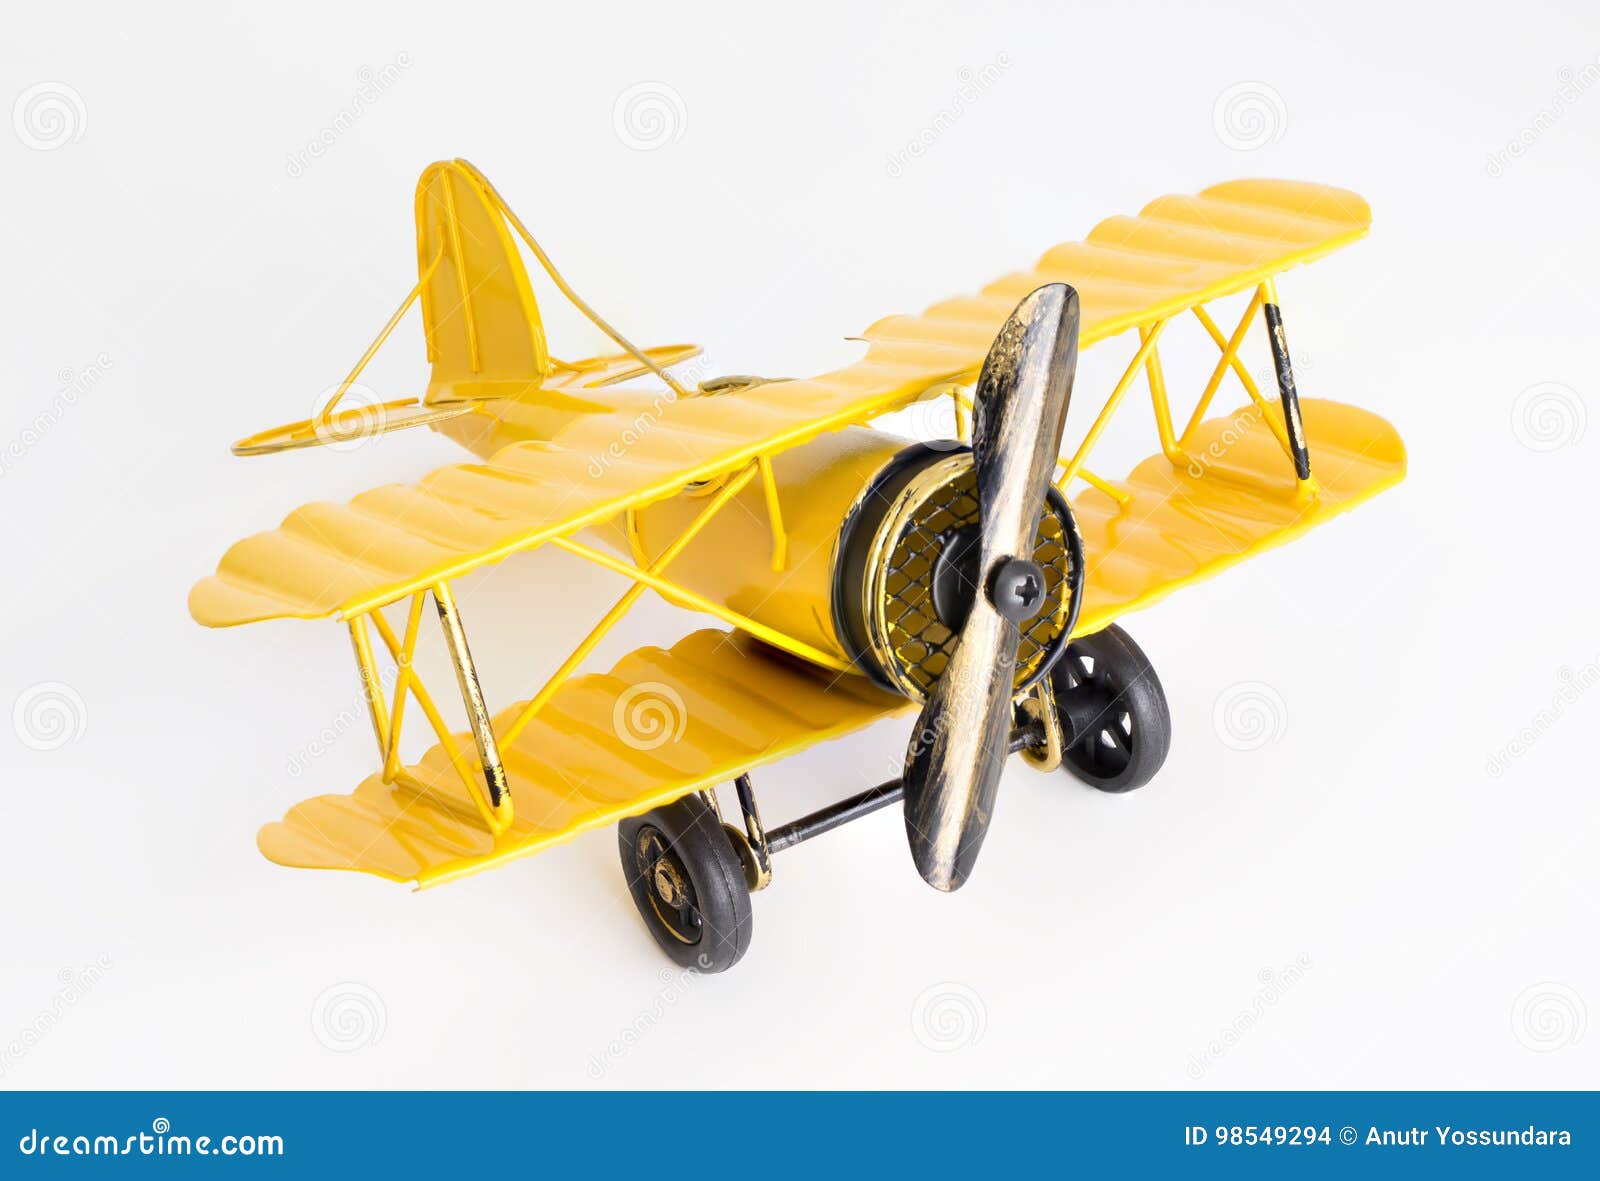 Avión modelo decorativas mini avión hierro avión biplano rojo/amarillo/azul 